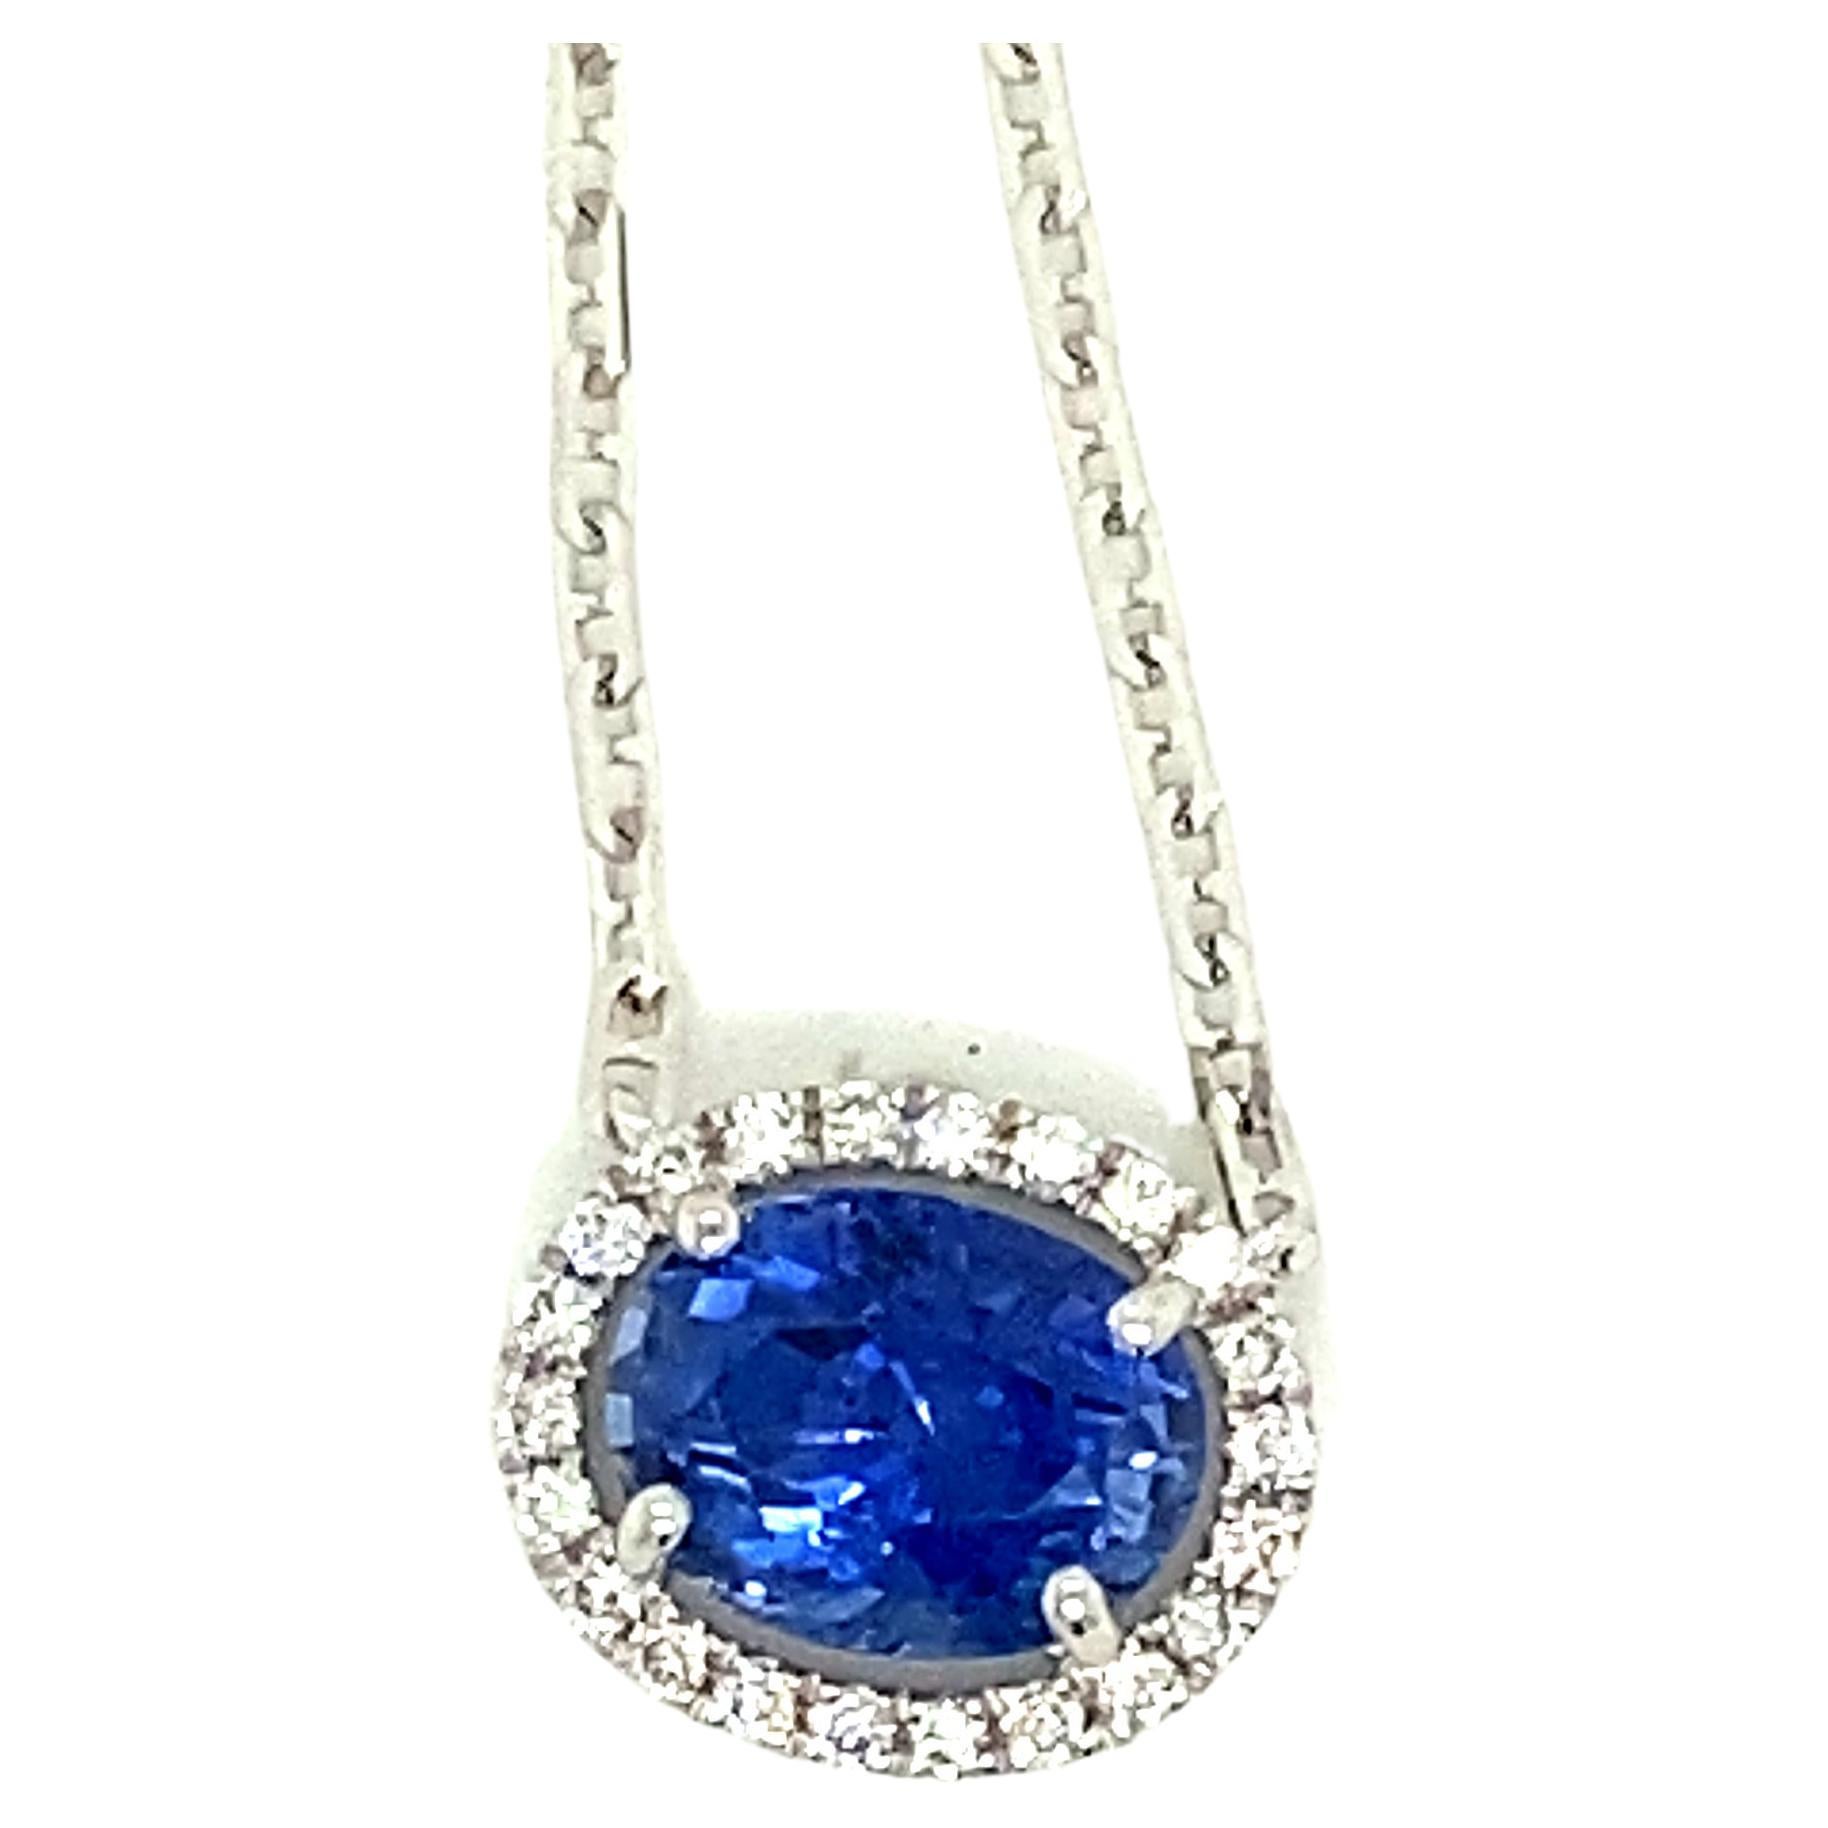 1.82Carat Vivid Blue Sapphire and Diamond Pendant Necklace